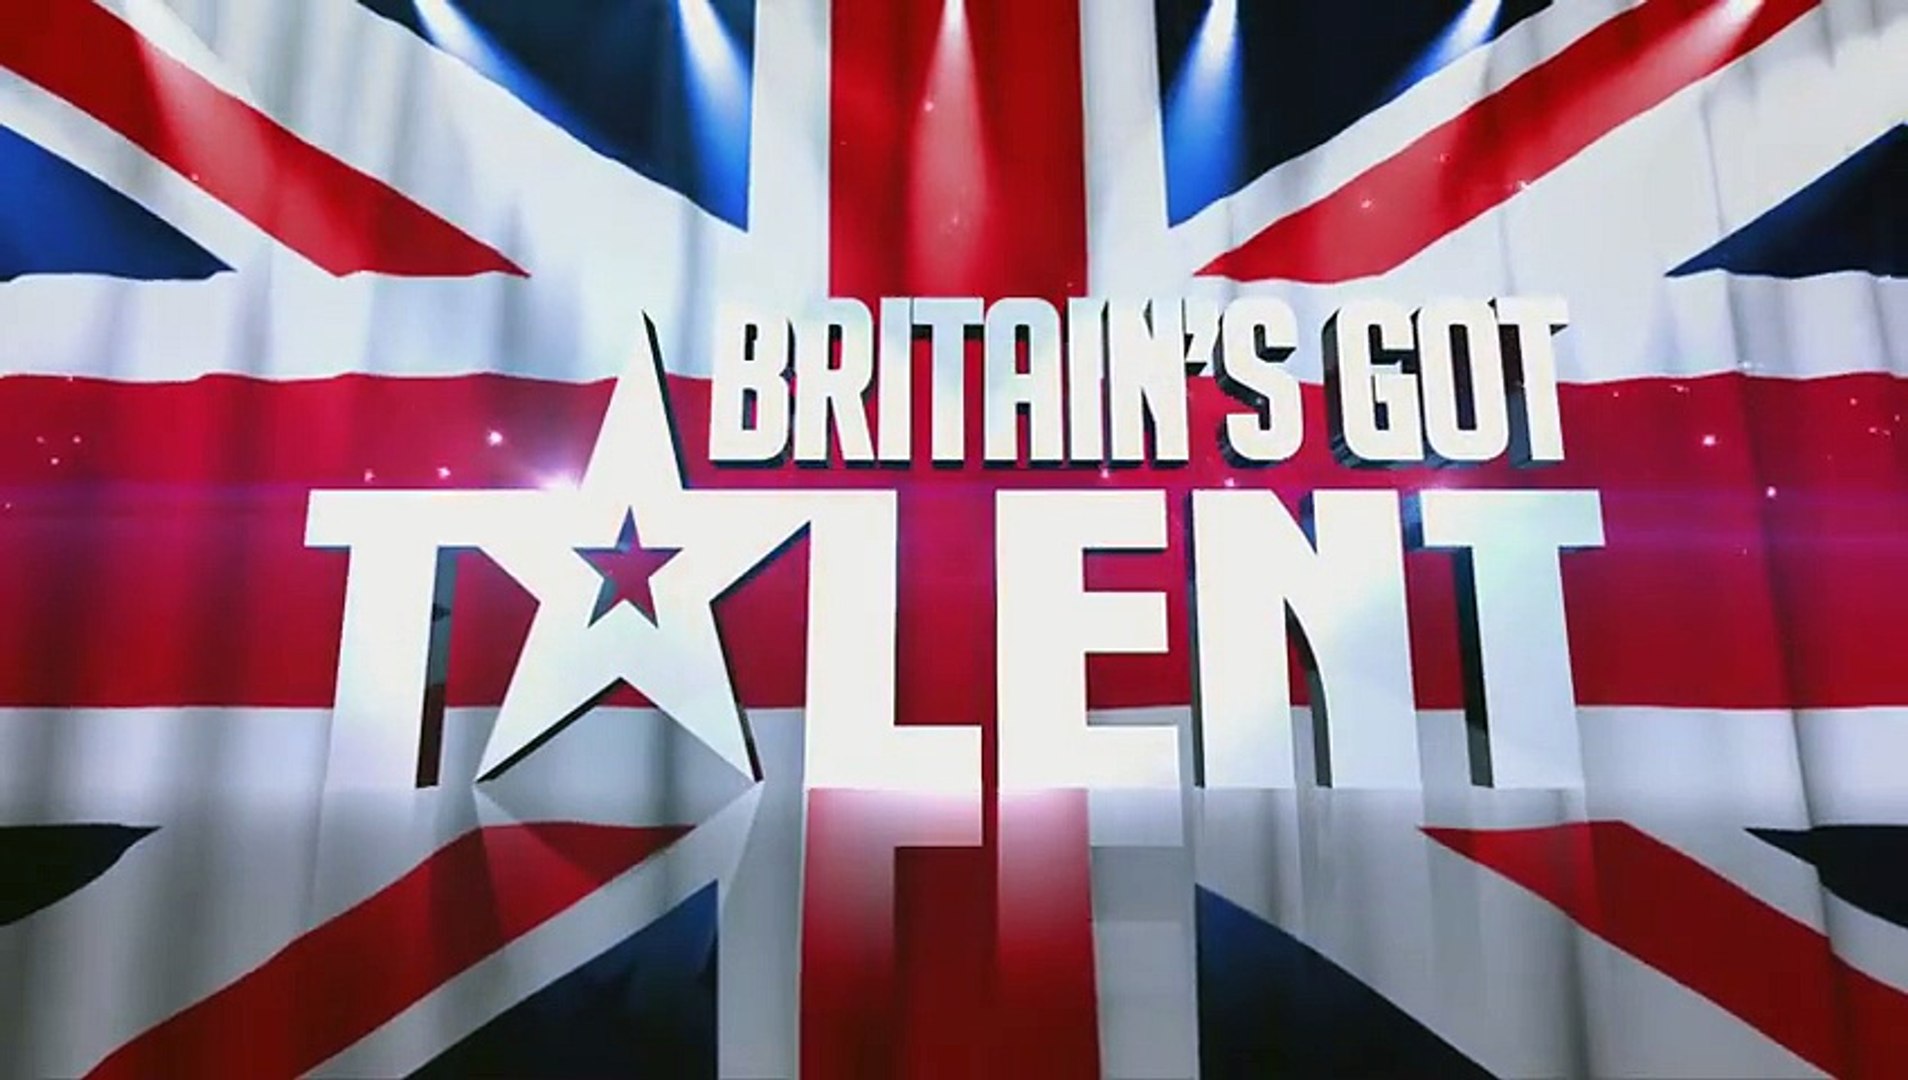 Lucy Kay sings Nessun Dorma   Britain's Got Talent 2015 Final